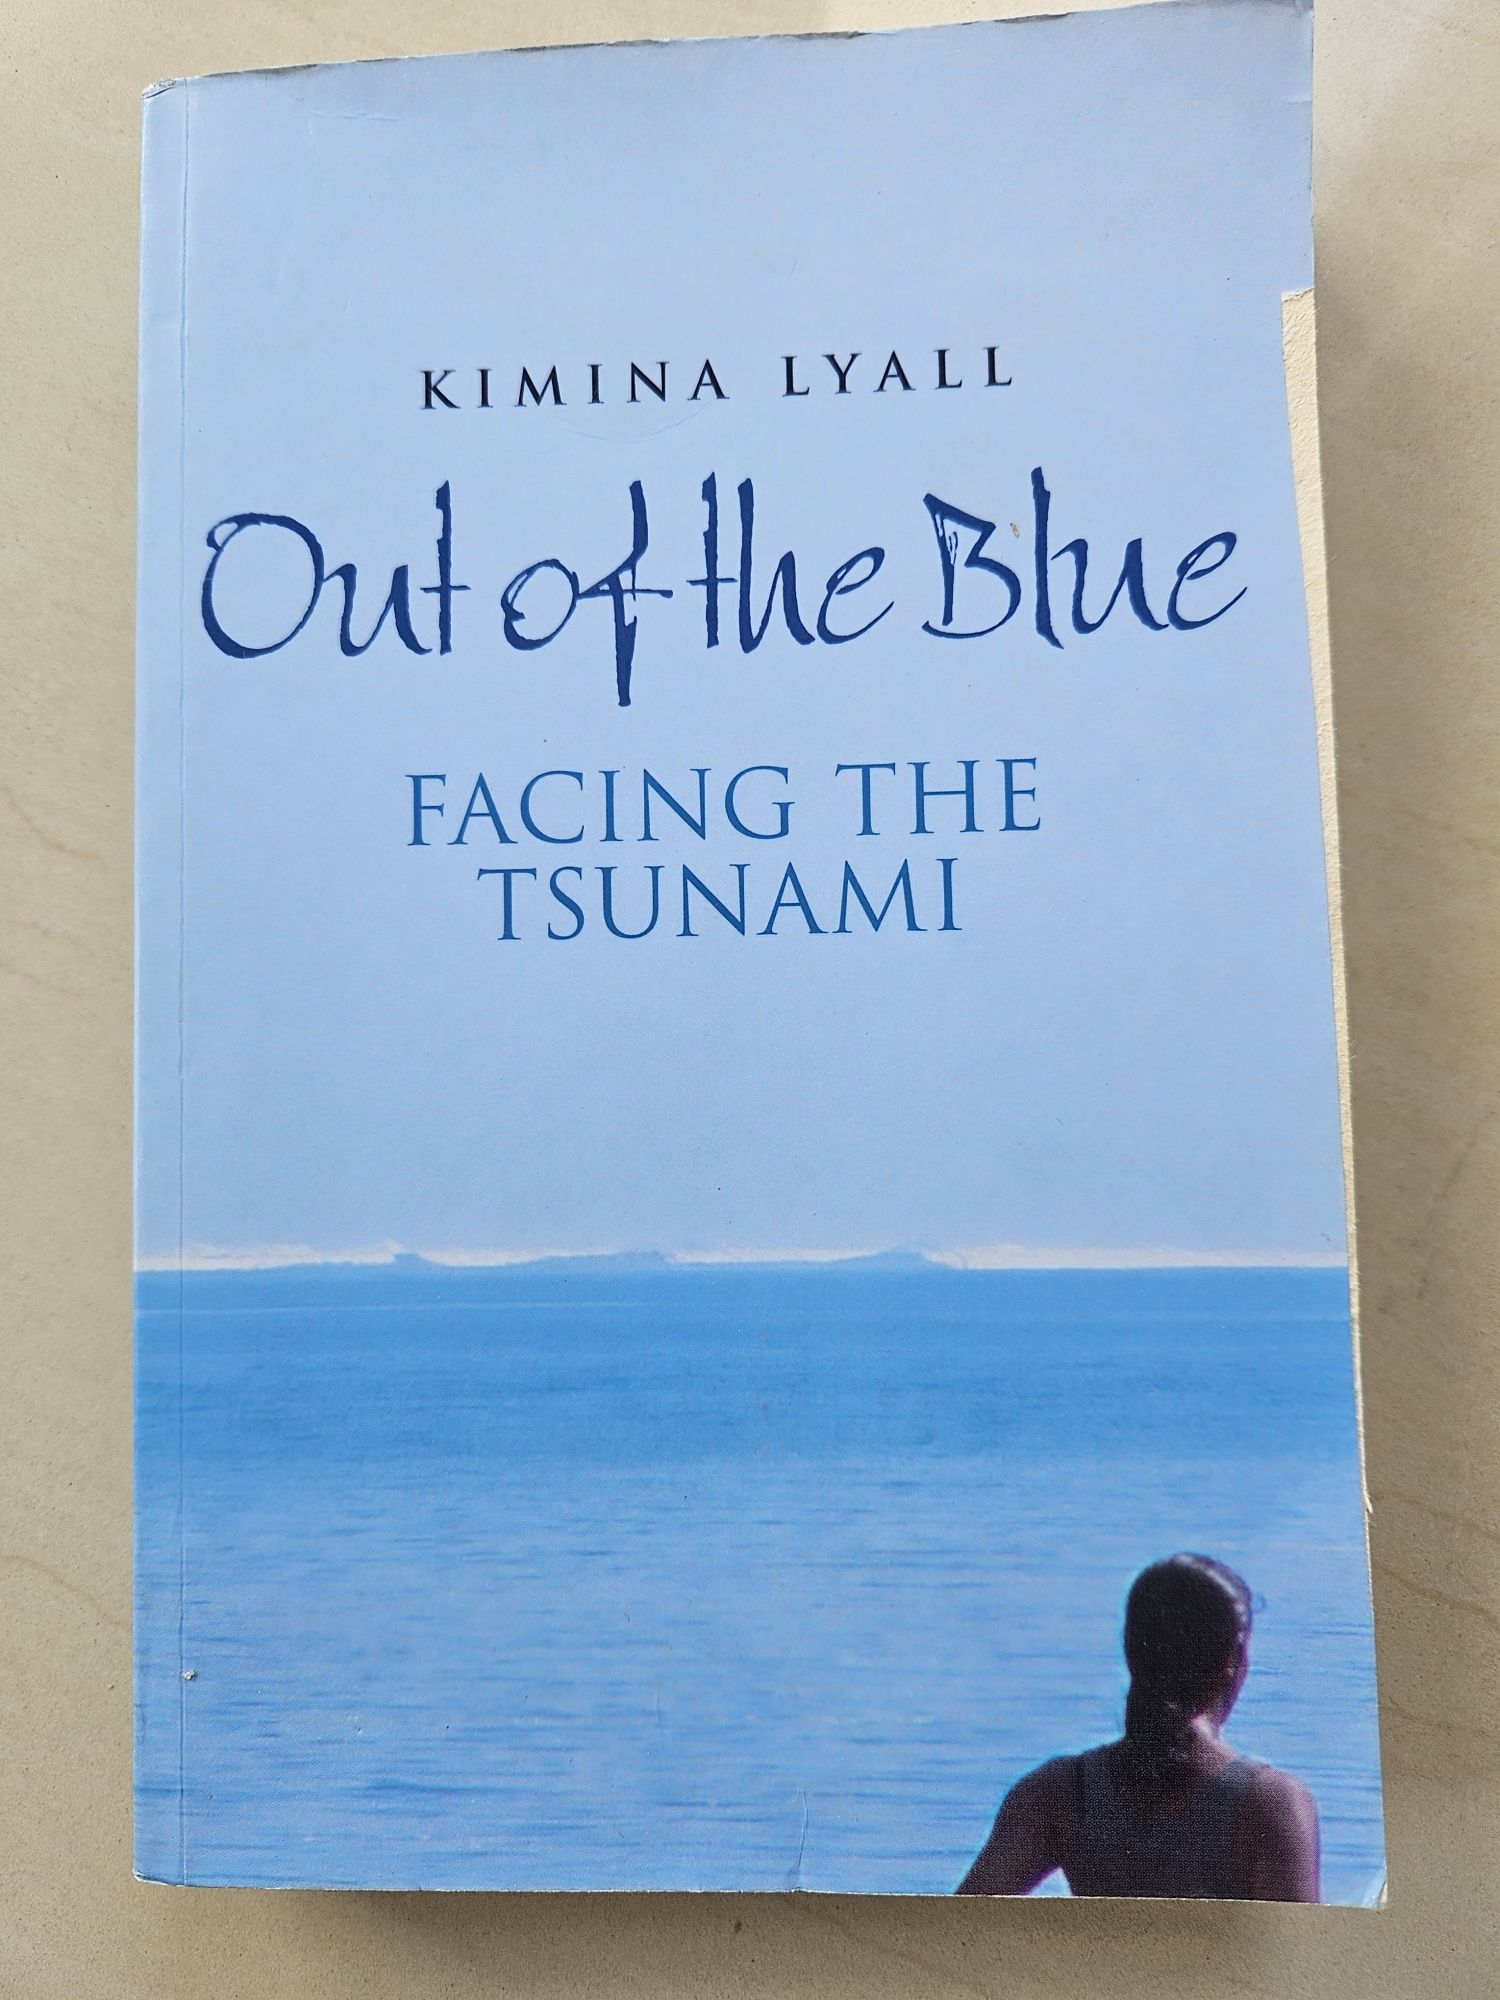 Out of the blue. Facing the tsunami. Książka po angielsku.